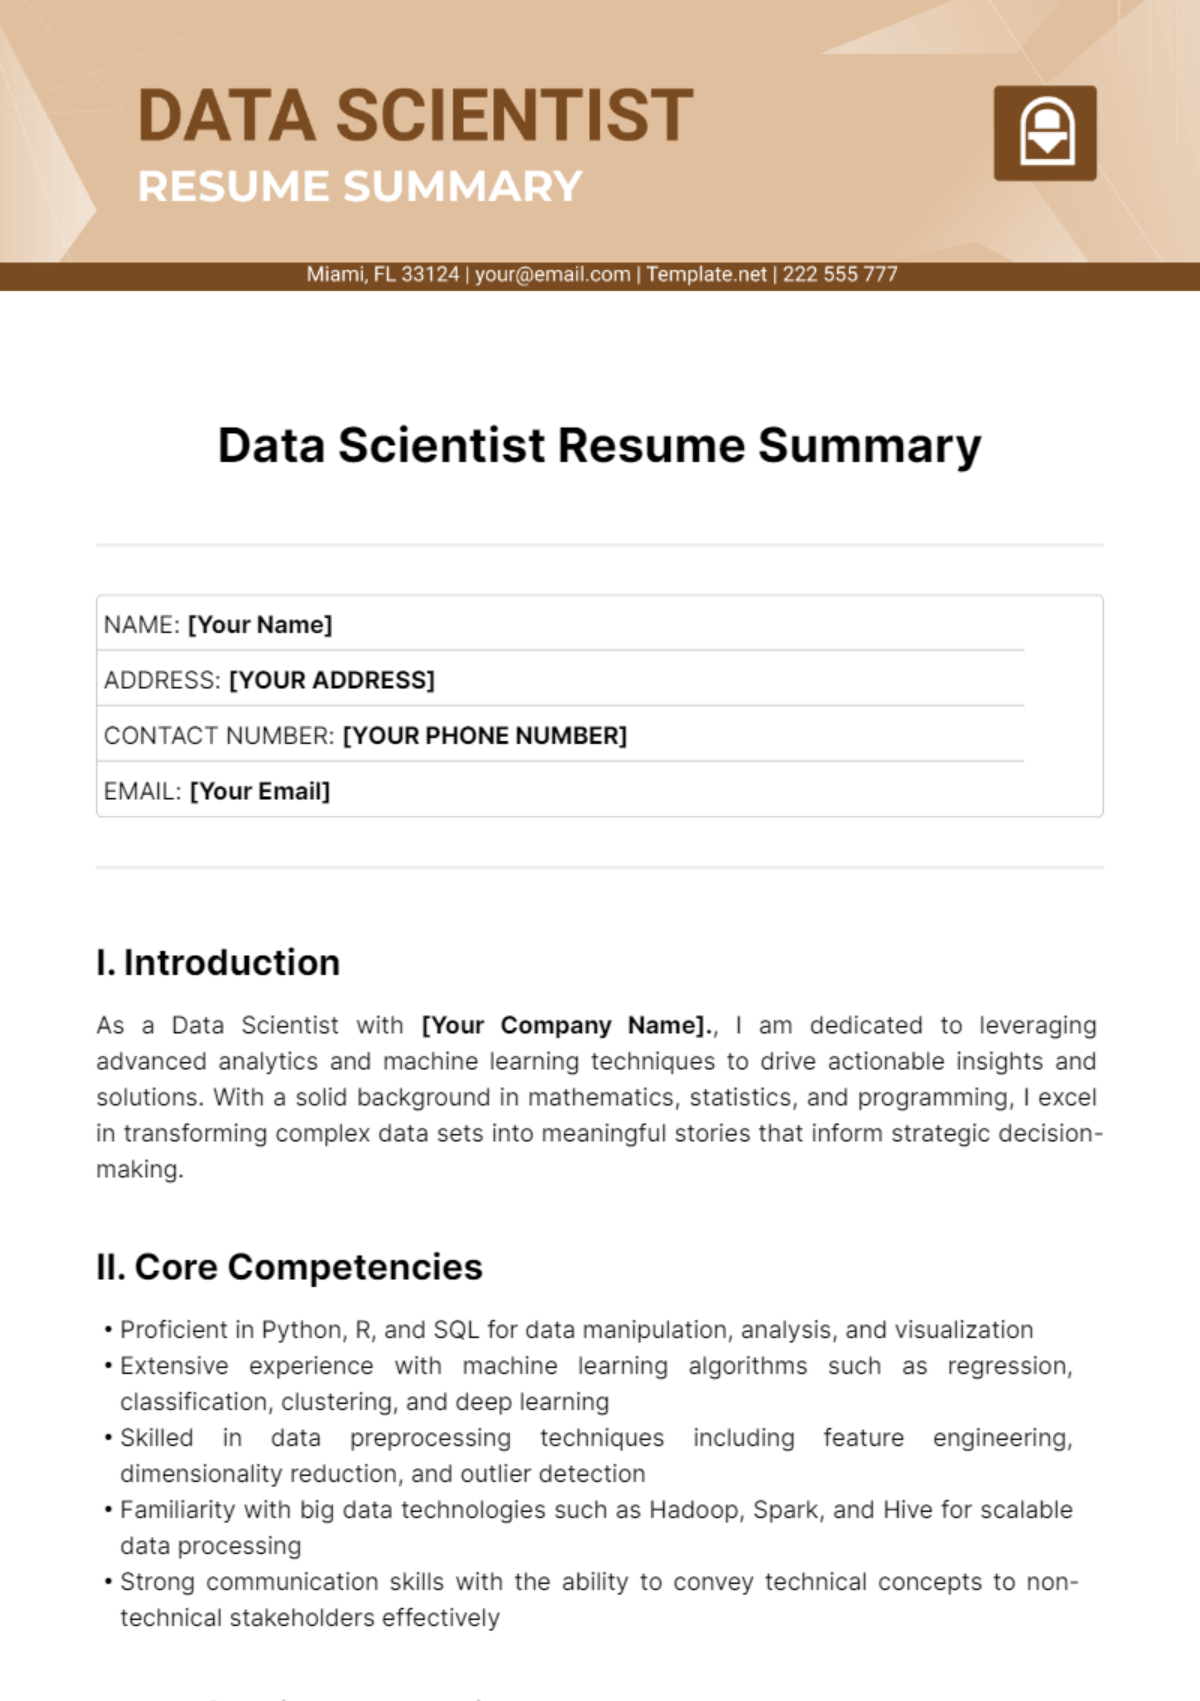 Data Scientist Resume Summary Template